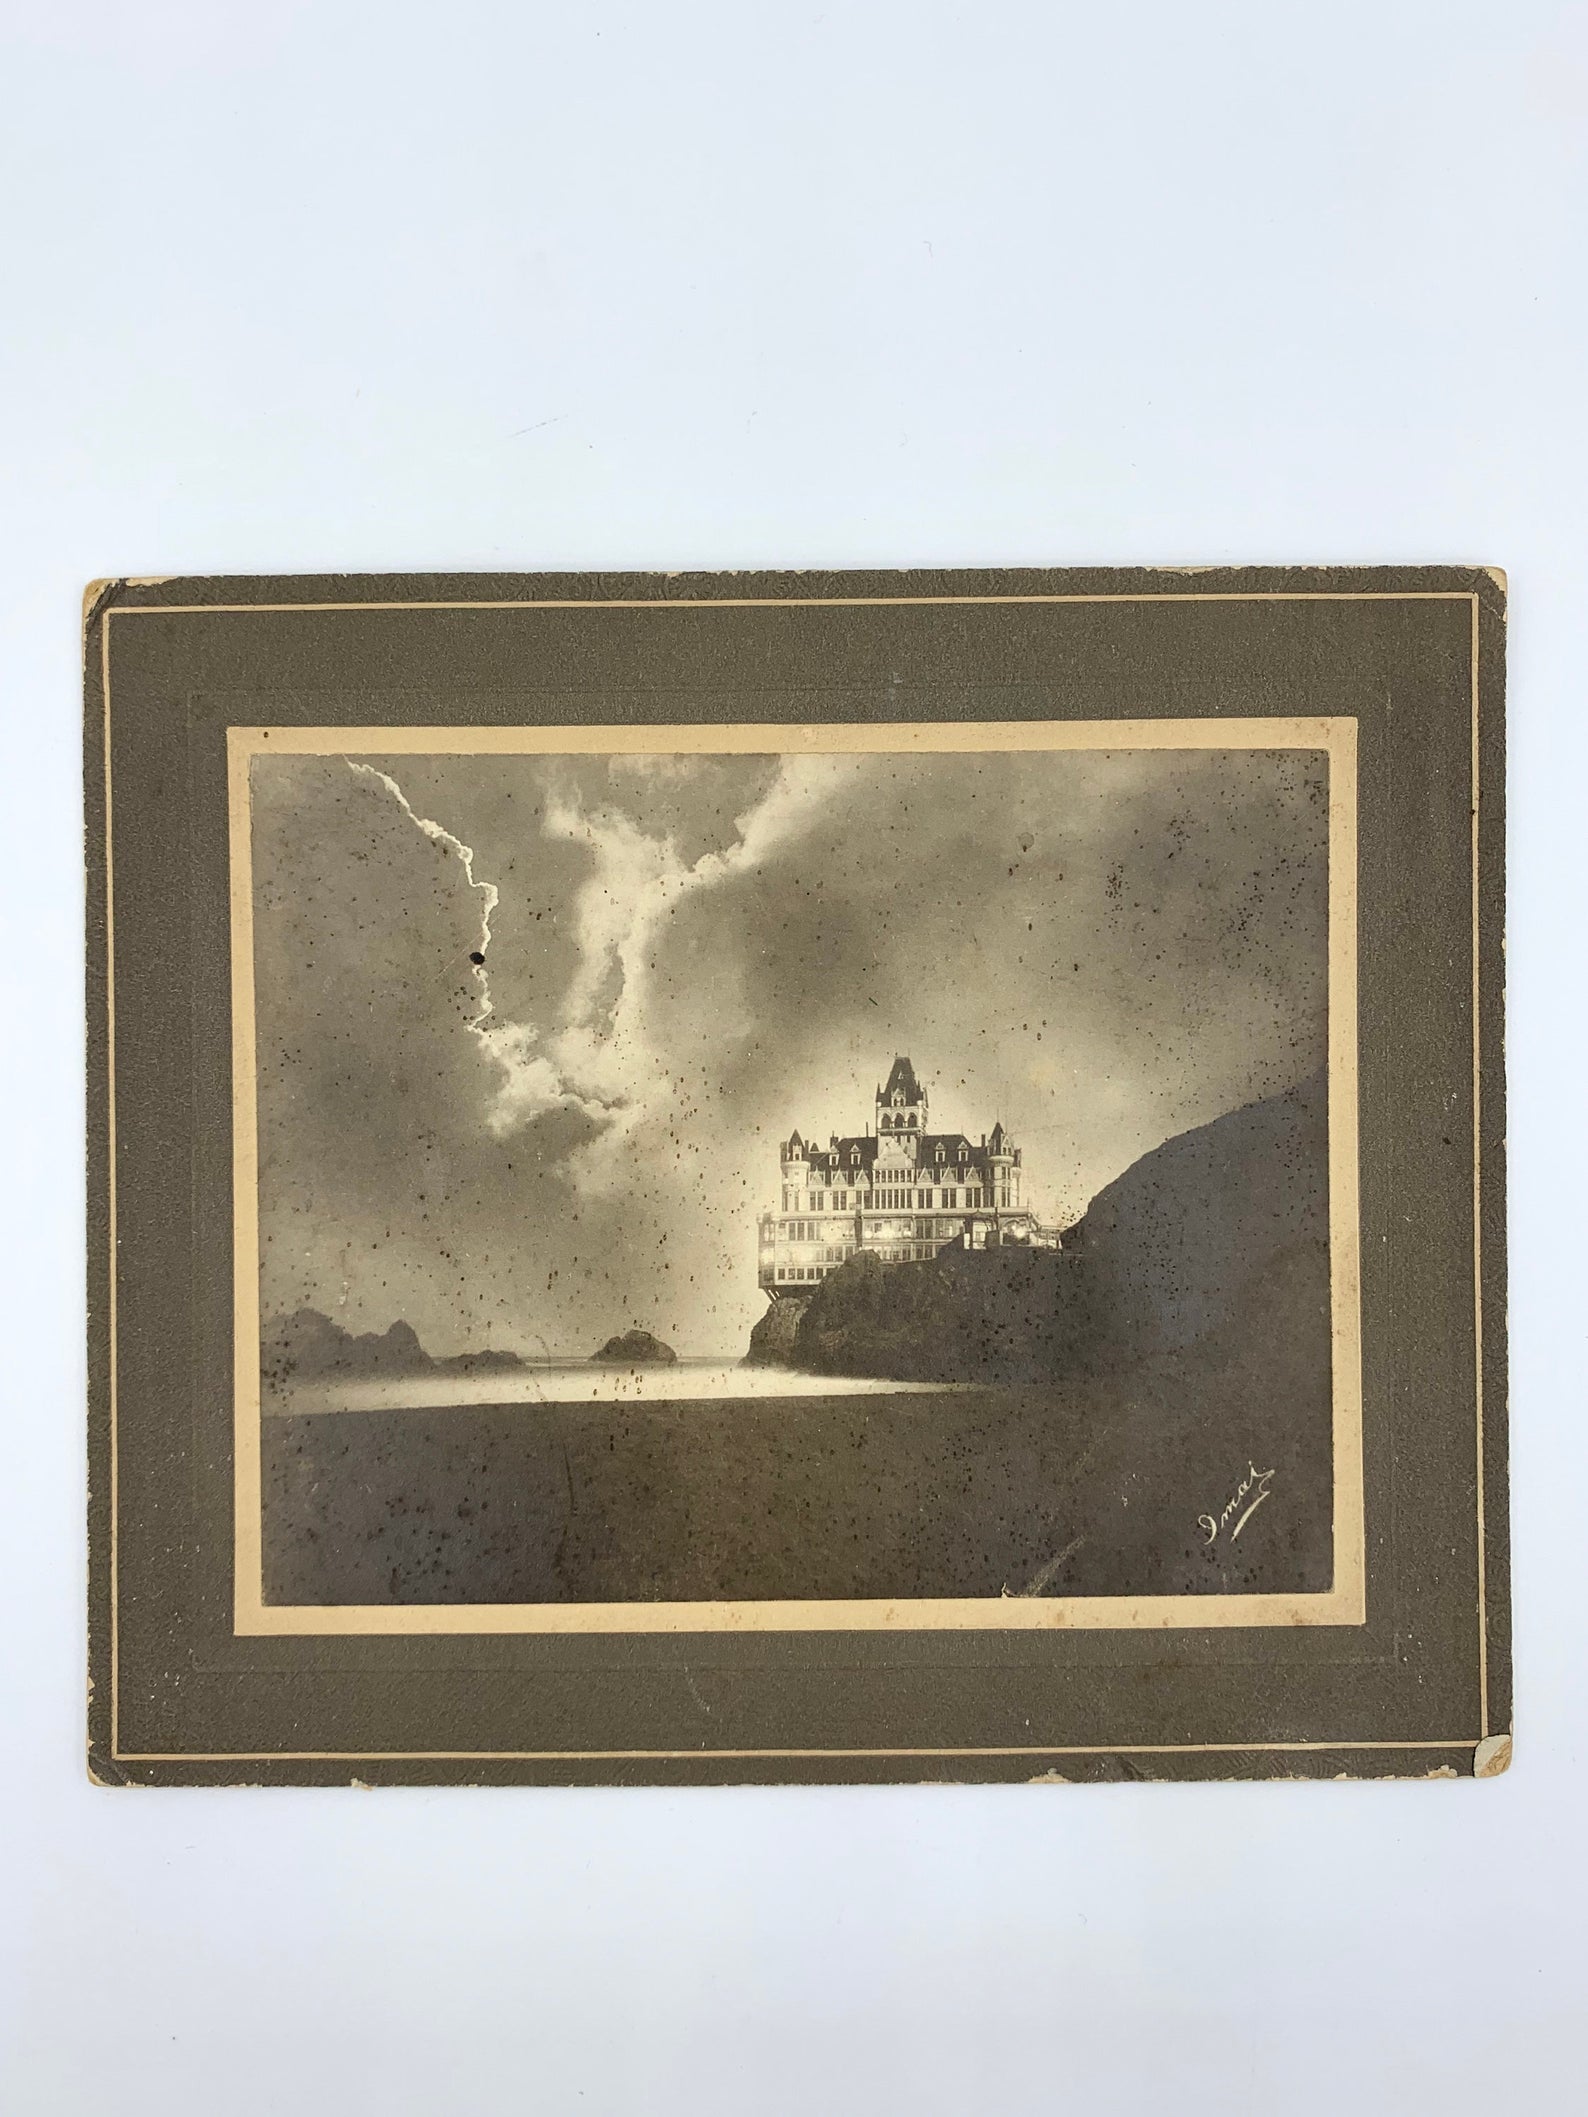 Photograph Cabinet Card of Cliff House; San Francisco; Tsunekichi Imai Early 1900's